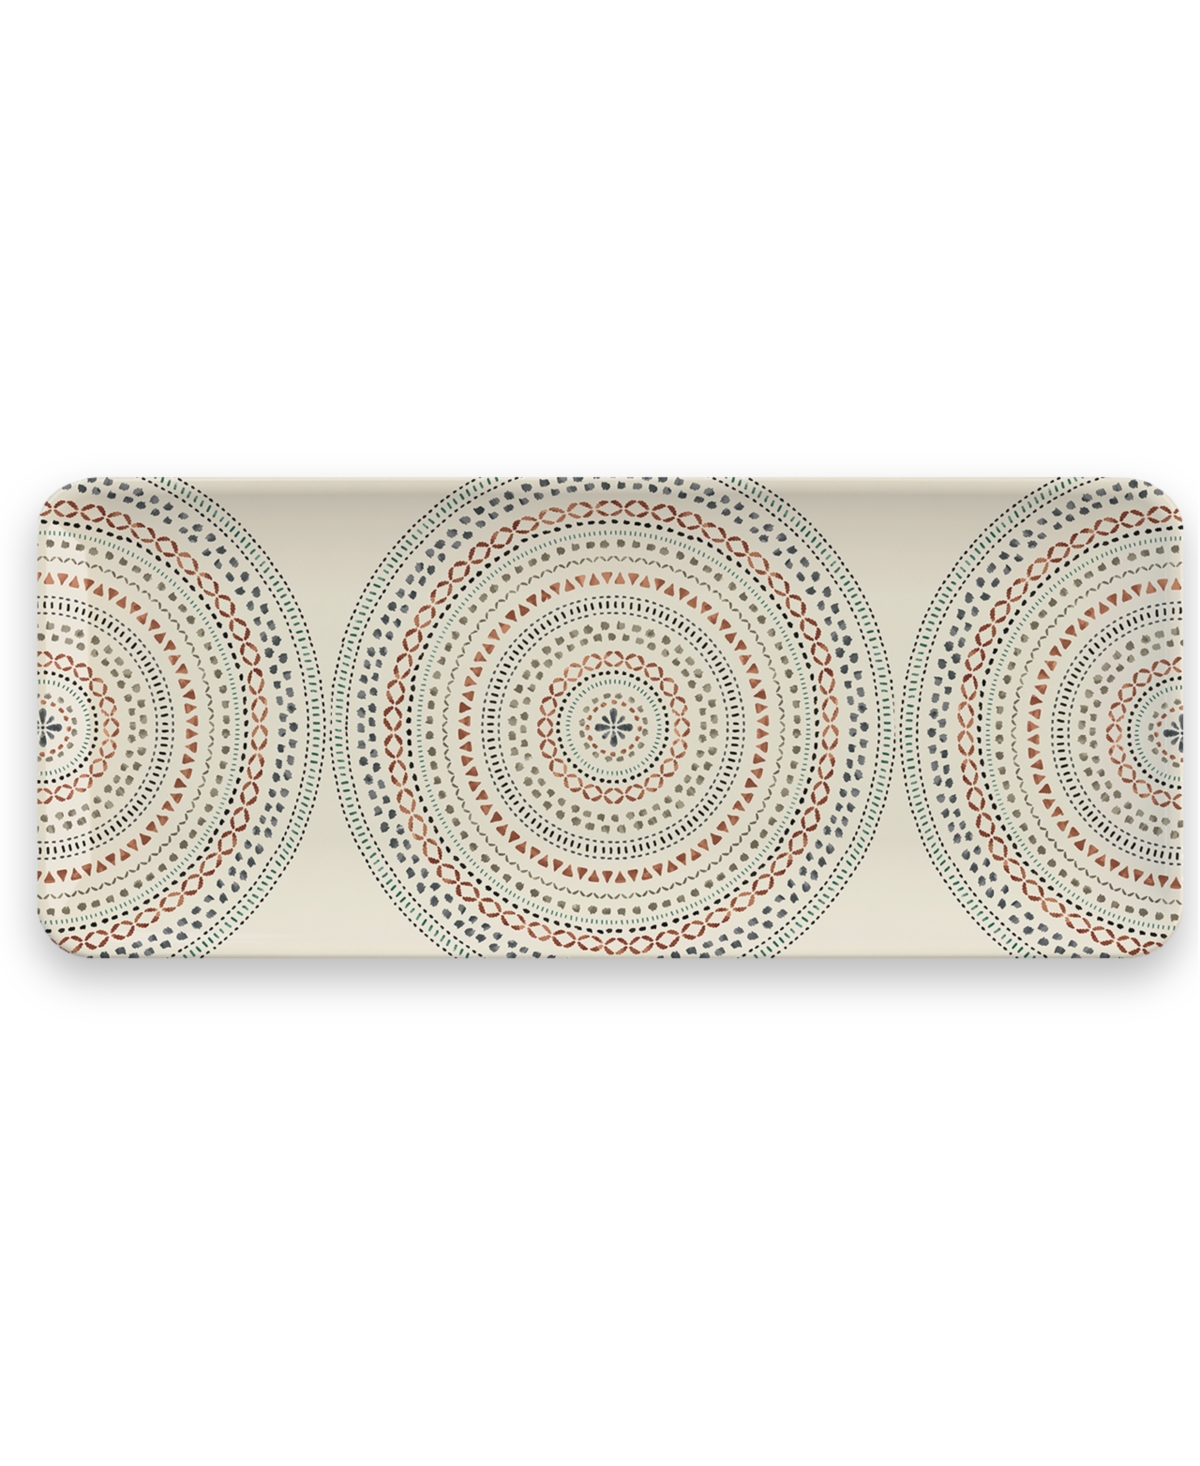 Desert Mandala Tray, 17.8" - Multi Color On Cream